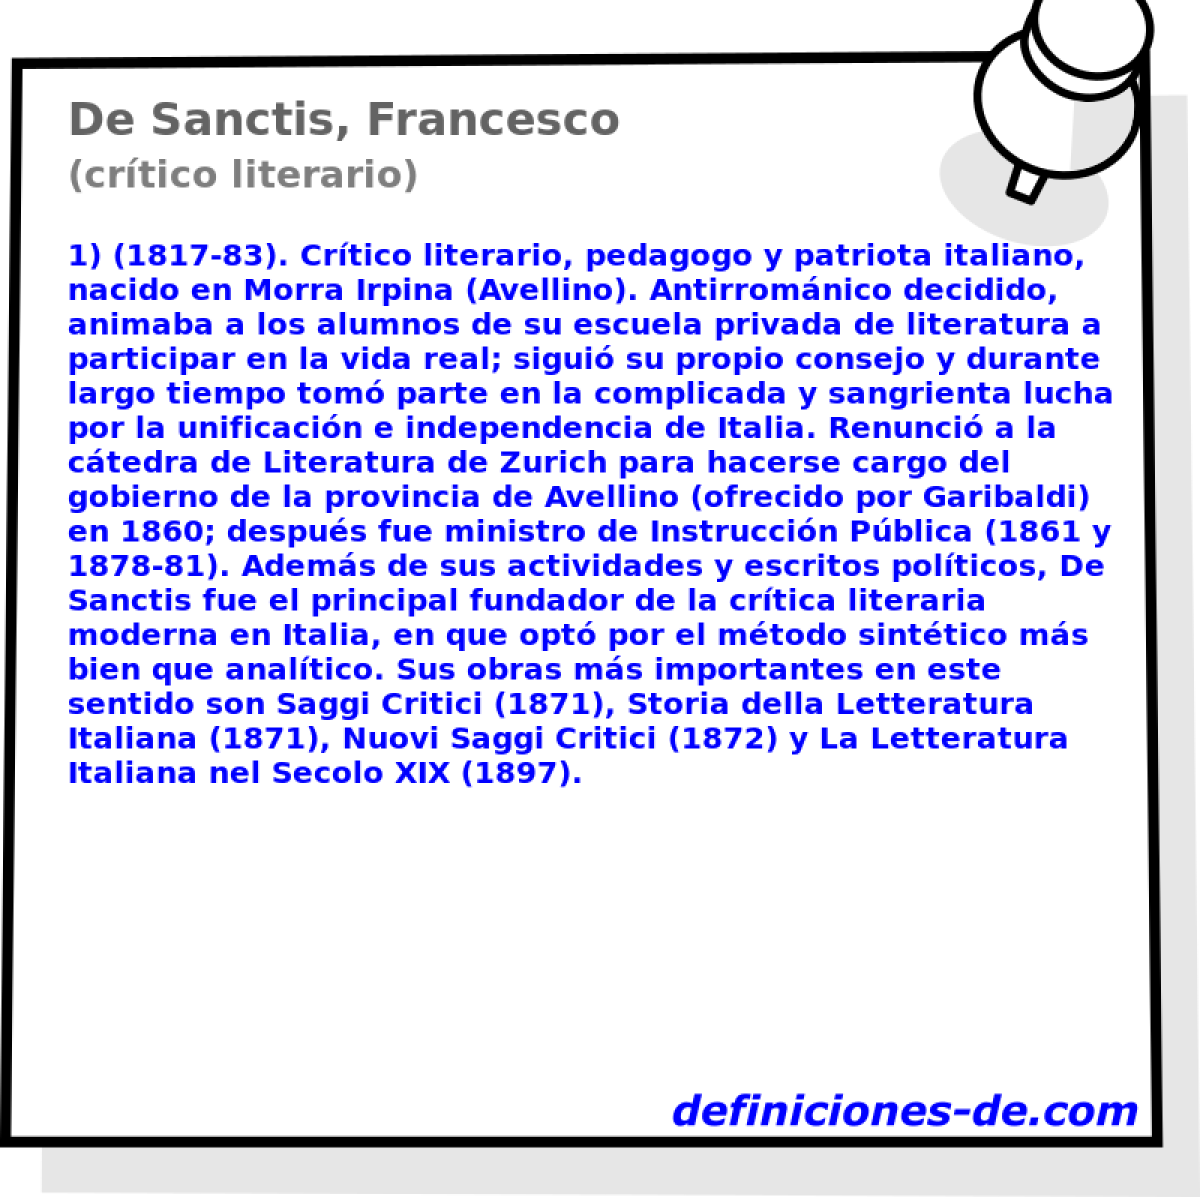 De Sanctis, Francesco (crtico literario)